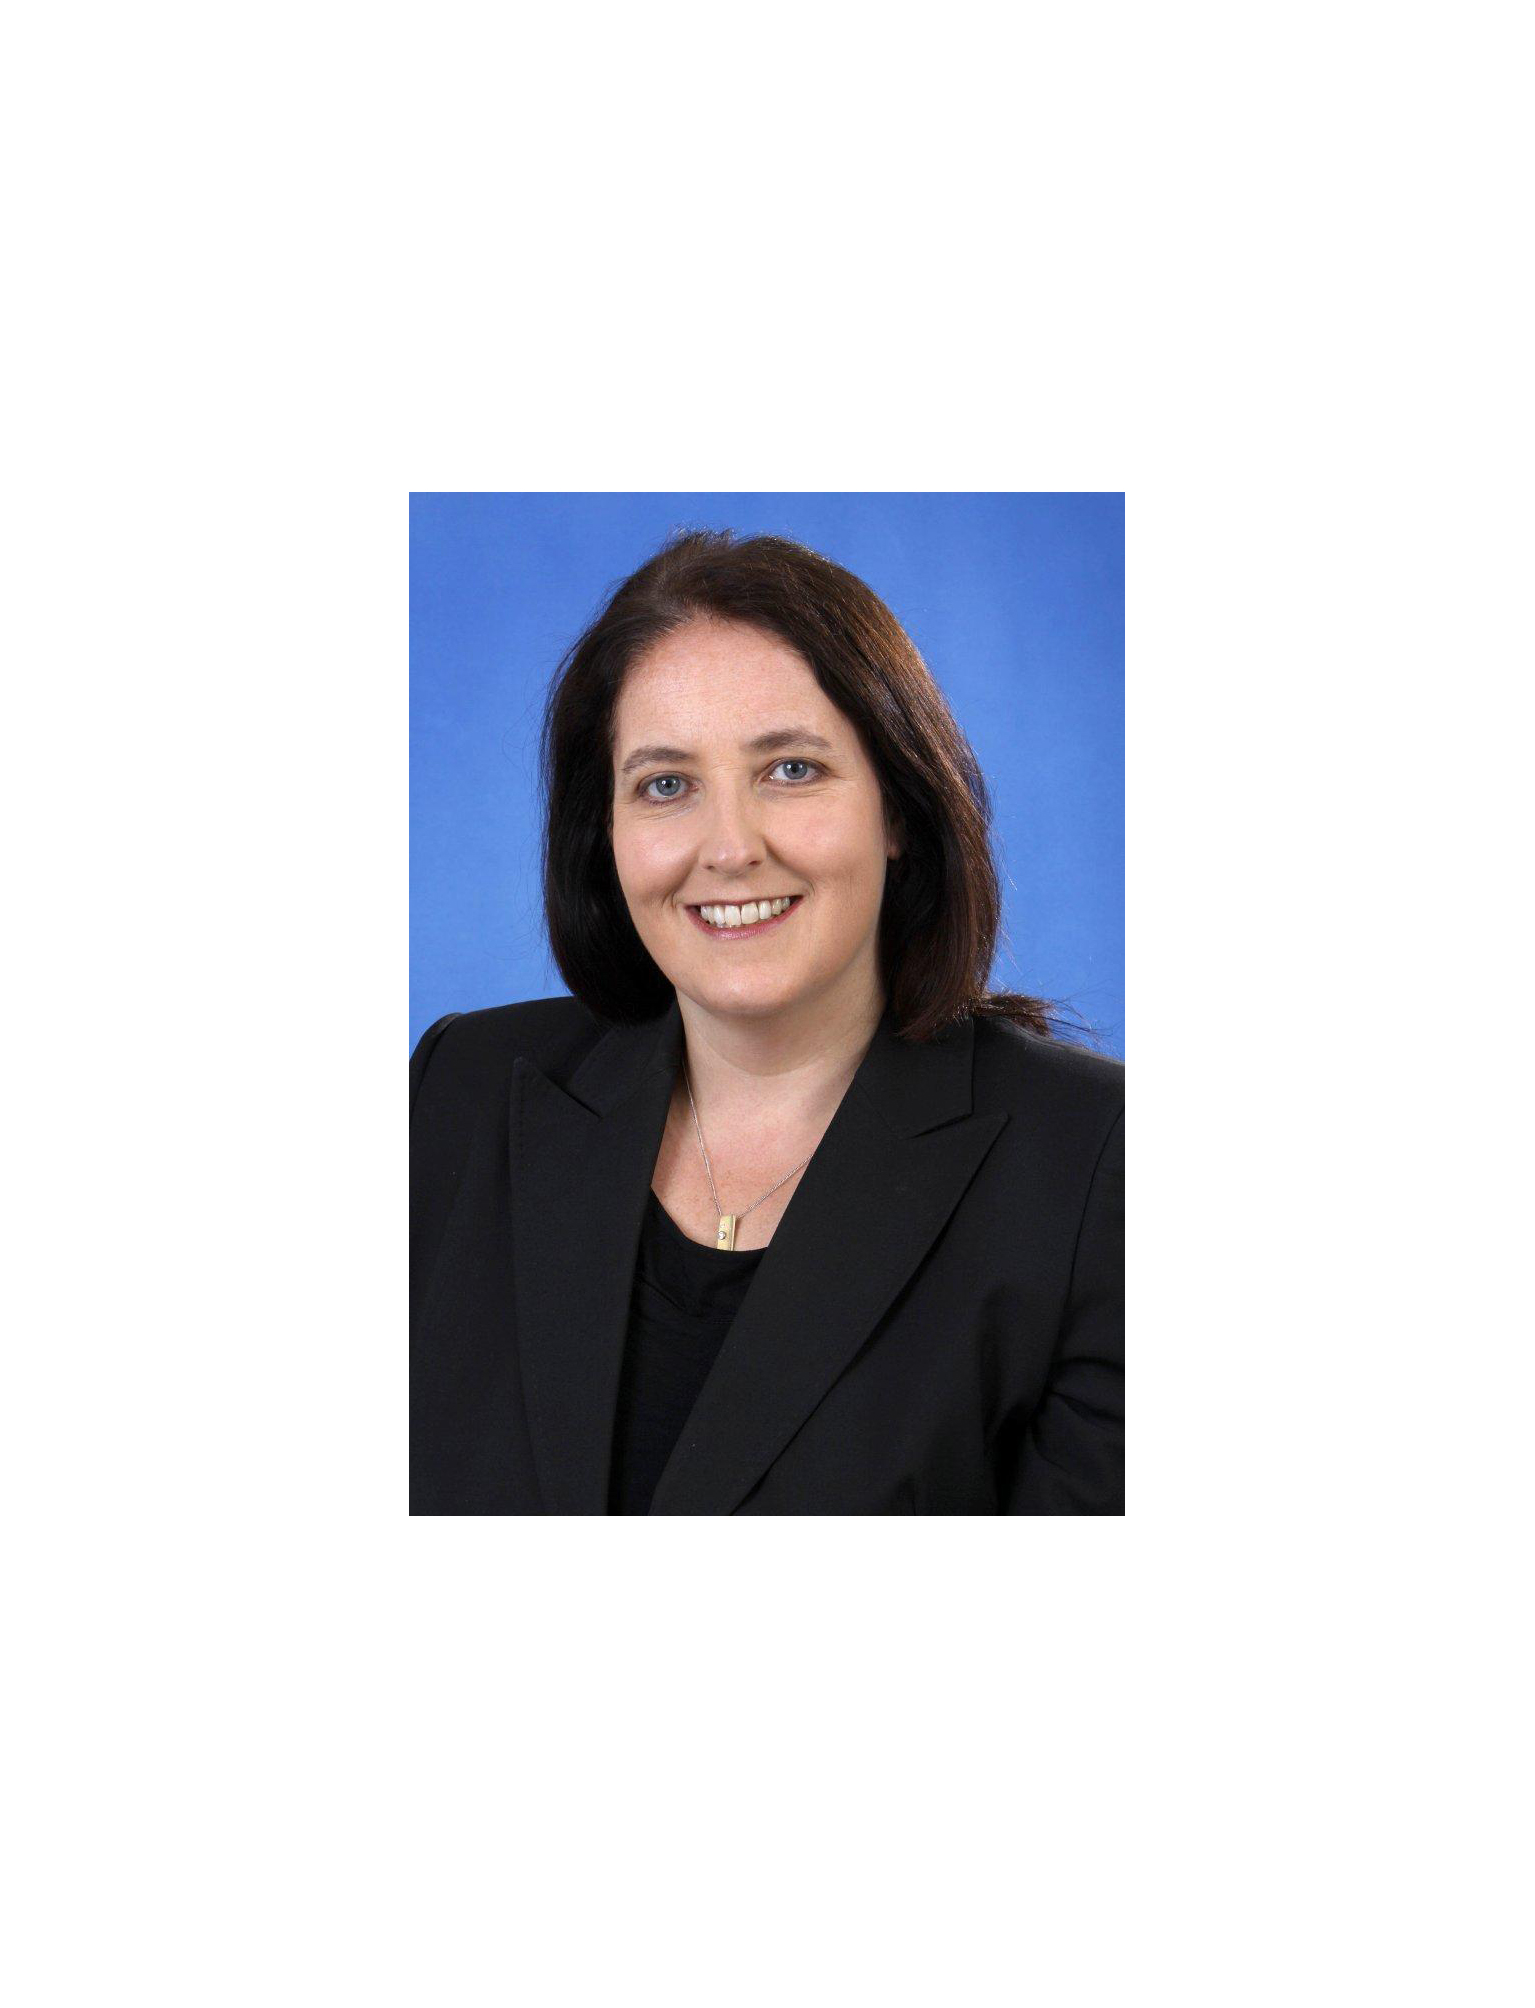 Fiona Curtin, Heineken’s new Global Business Development Manager for Cider.